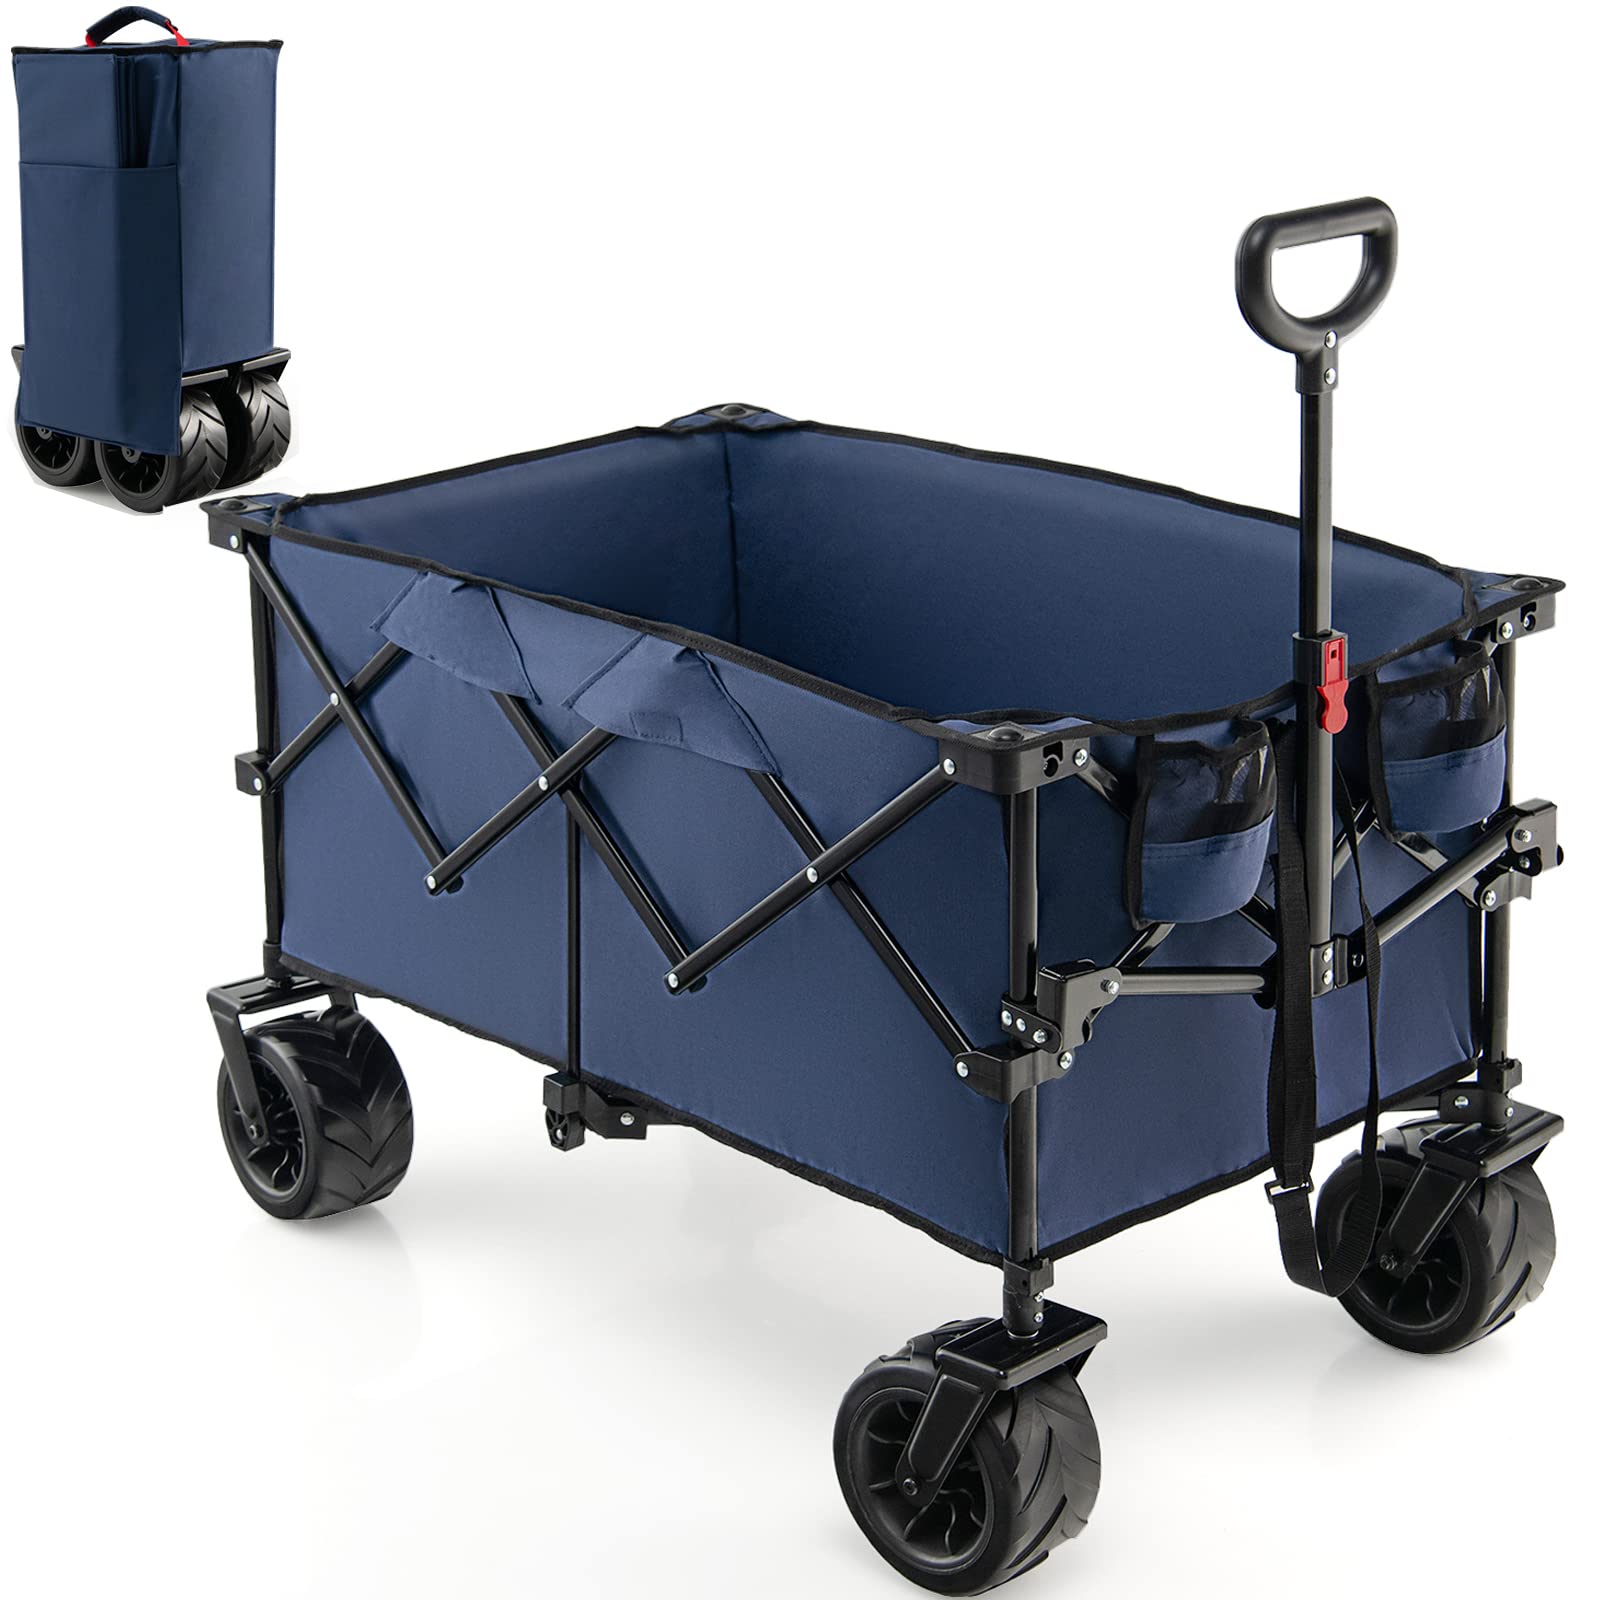 Giantex Folding Wagon Cart, Collapsible Beach Wagon with All Terrain Universal Wheels